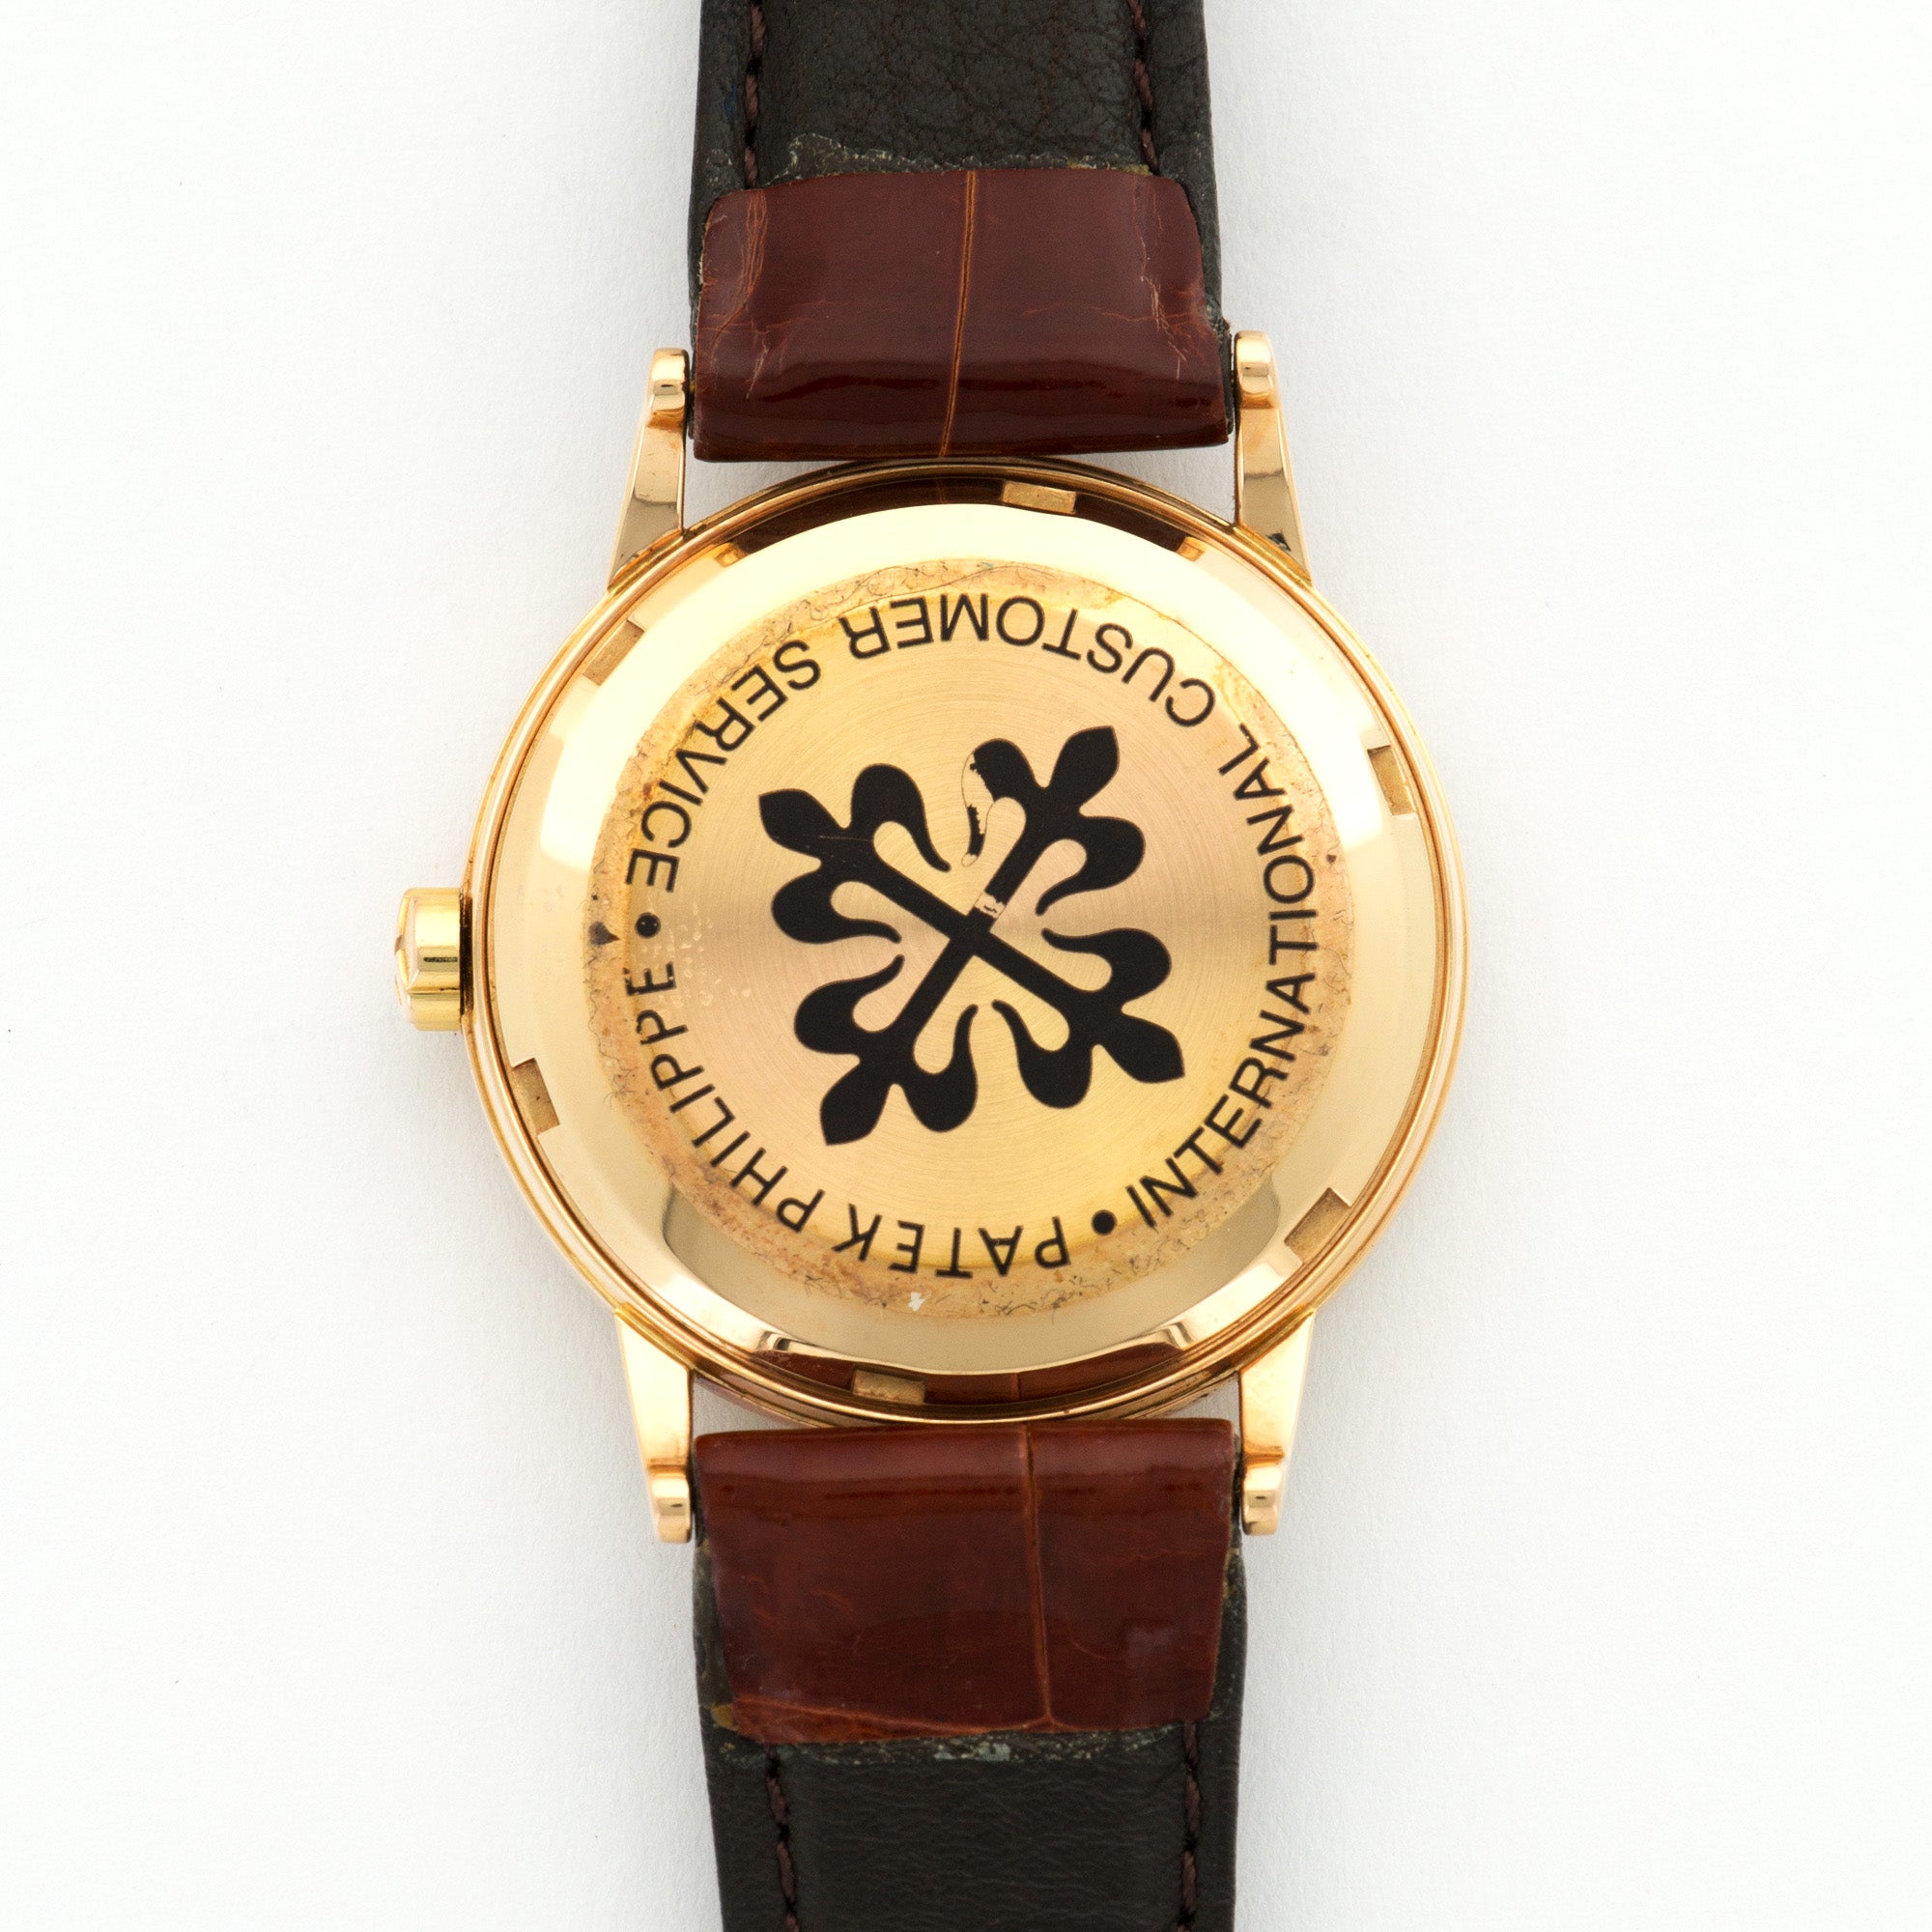 Patek Philippe - Patek Philippe Calatrava Rose Gold Ref. 3425R - The Keystone Watches